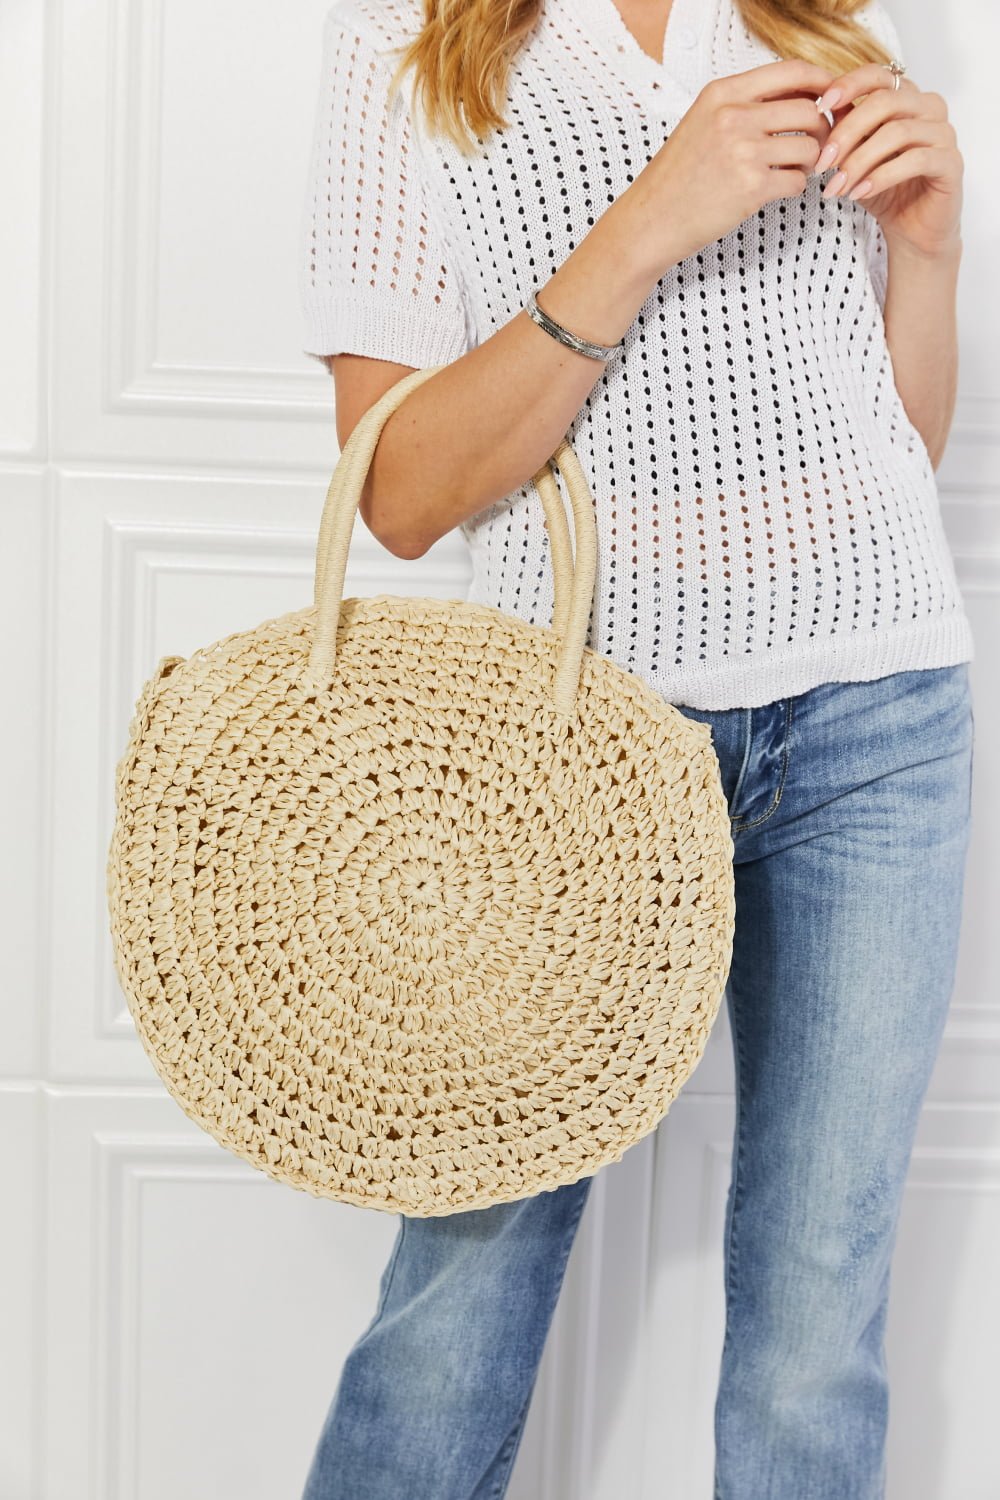 Justin Taylor Beach Date Straw Rattan Handbag in Ivory | Sugarz Chique Boutique